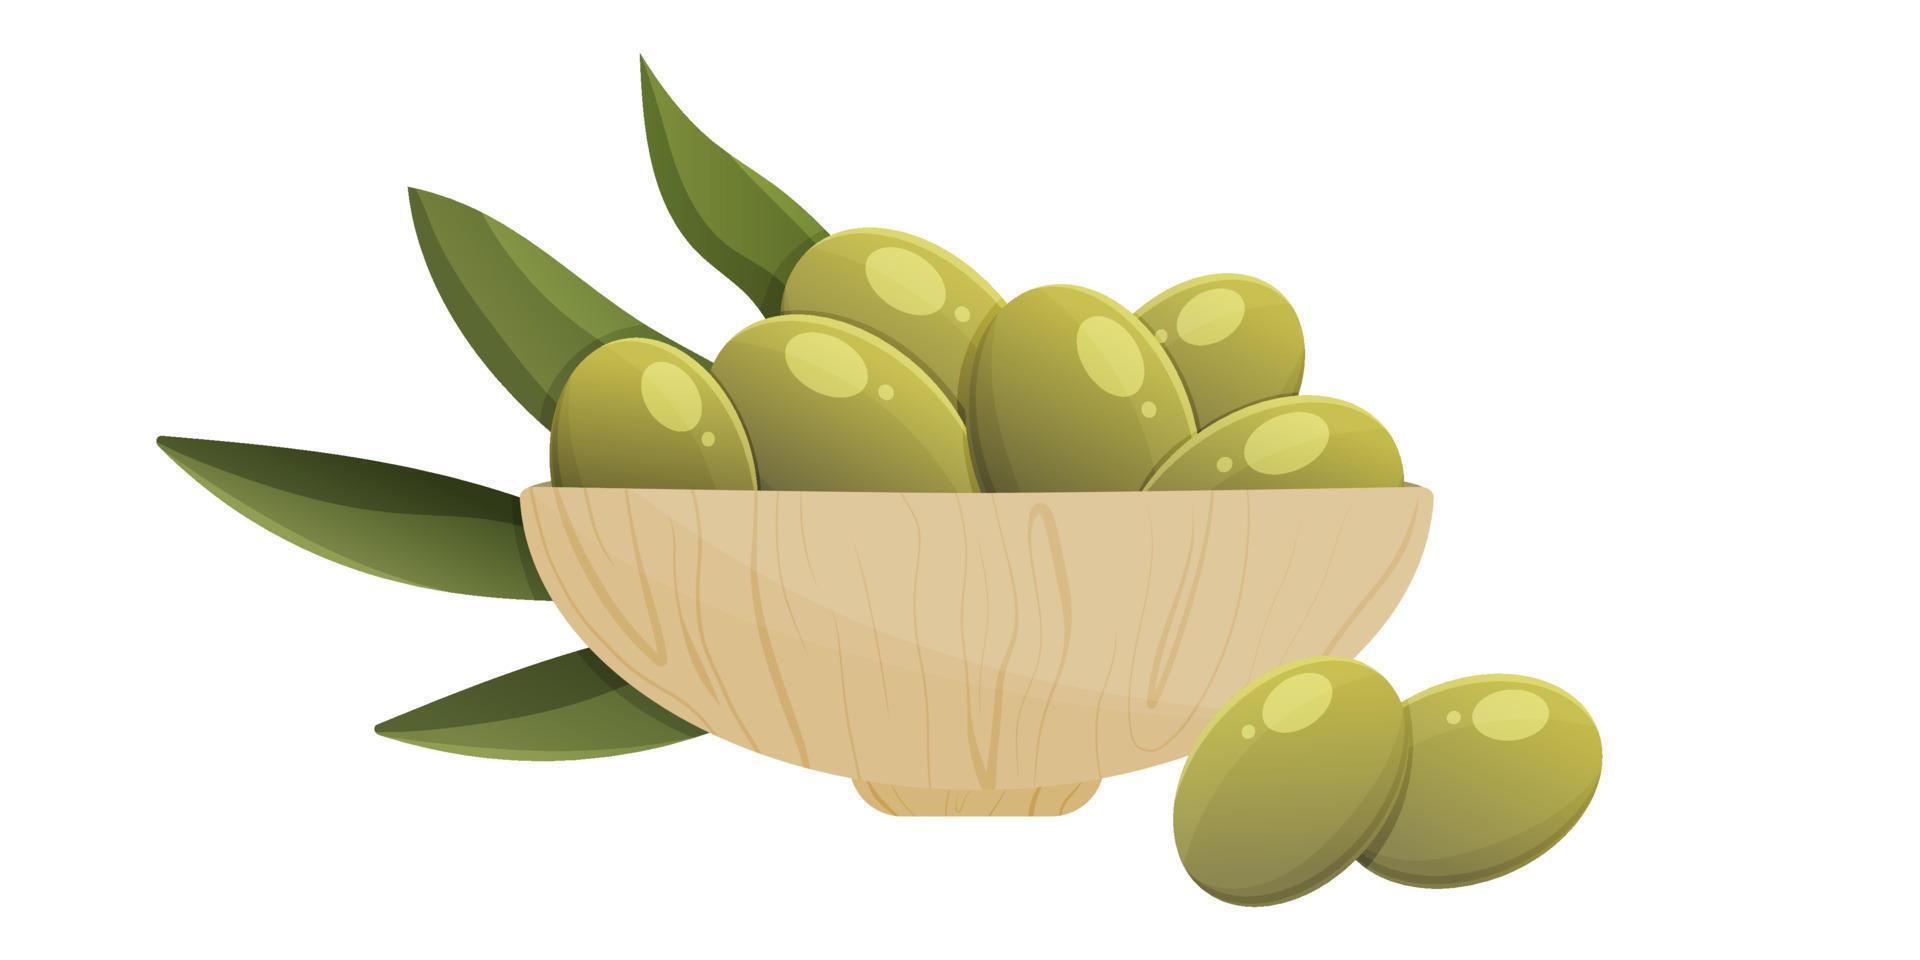 grüne Oliven auf einem Teller. isolierte illustration des karikaturvektors vektor